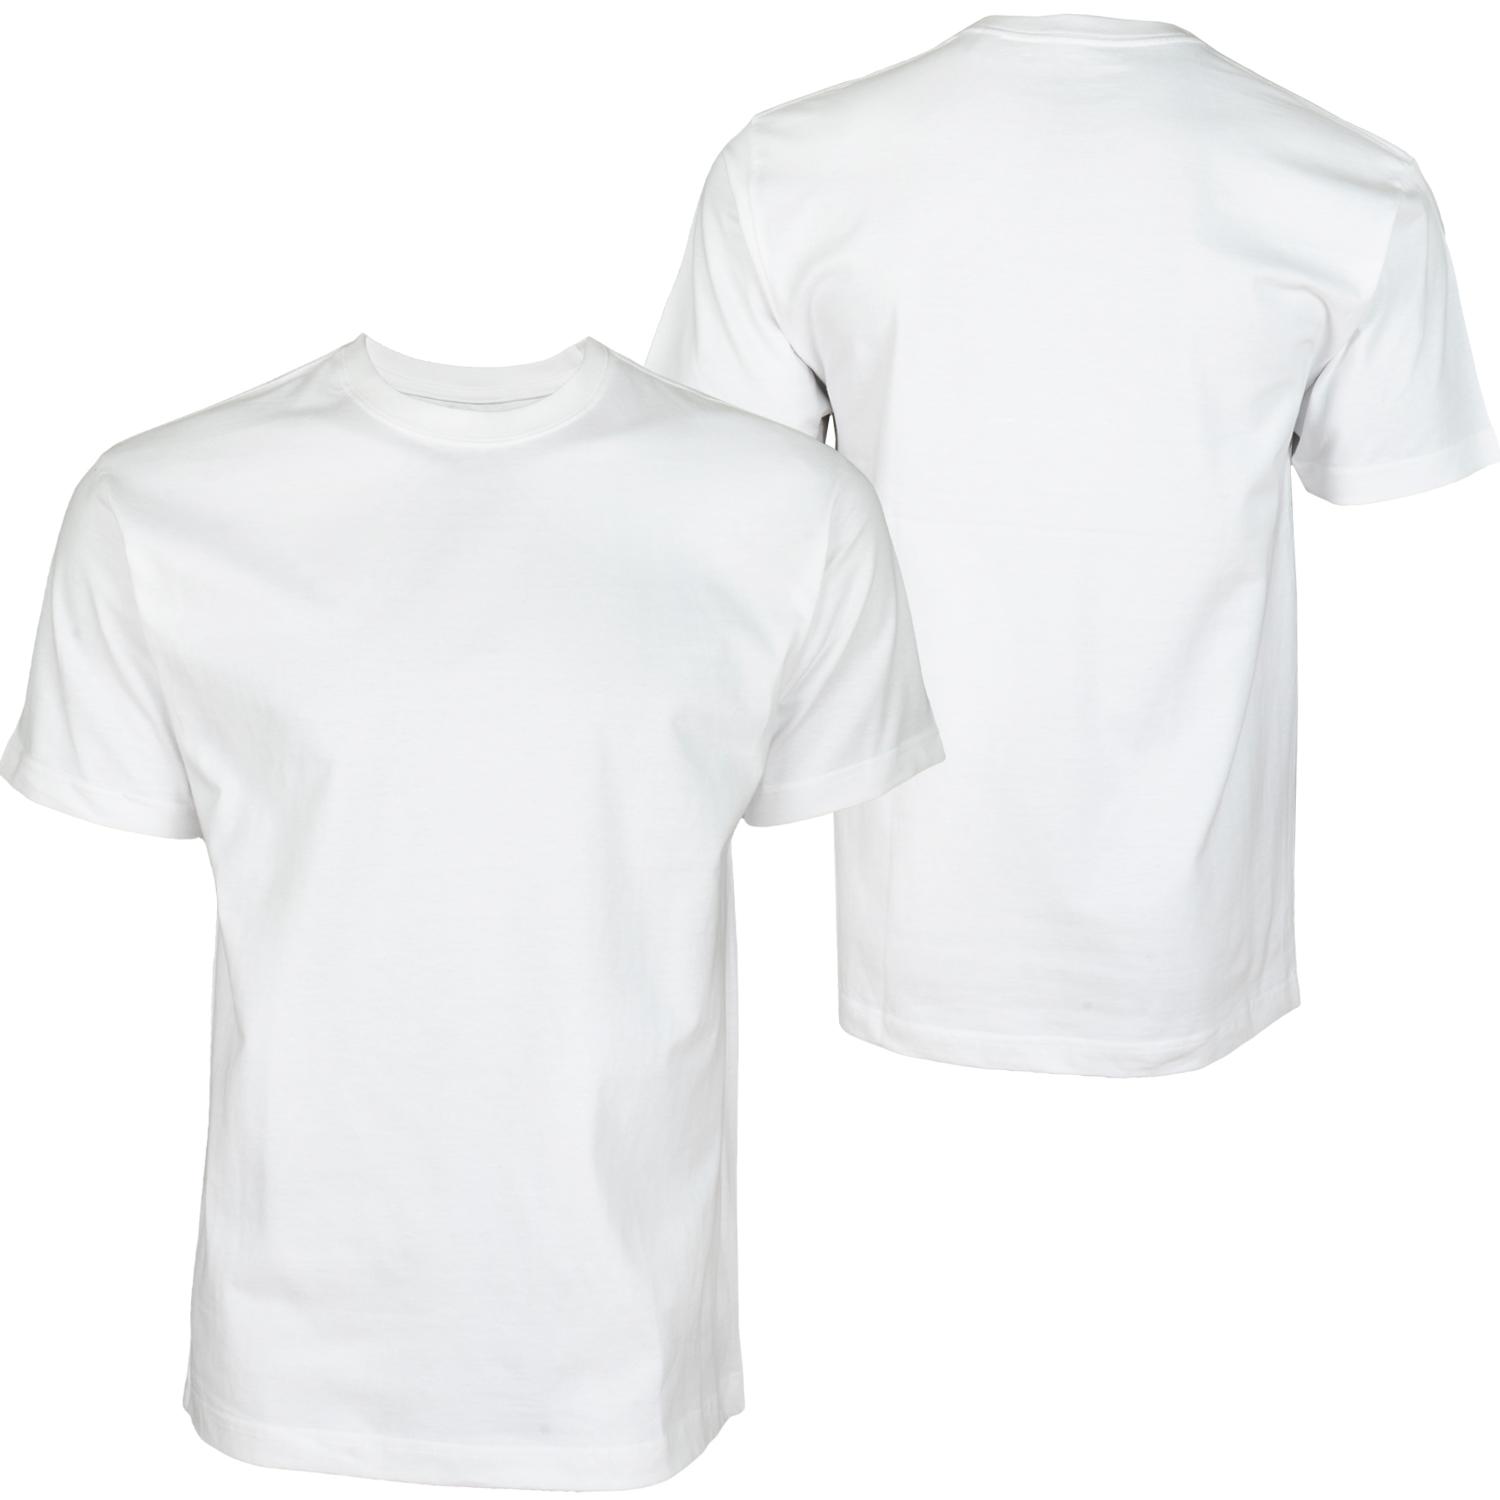 Foto Shmack Basic Blank Camisetas Blanco foto 145282